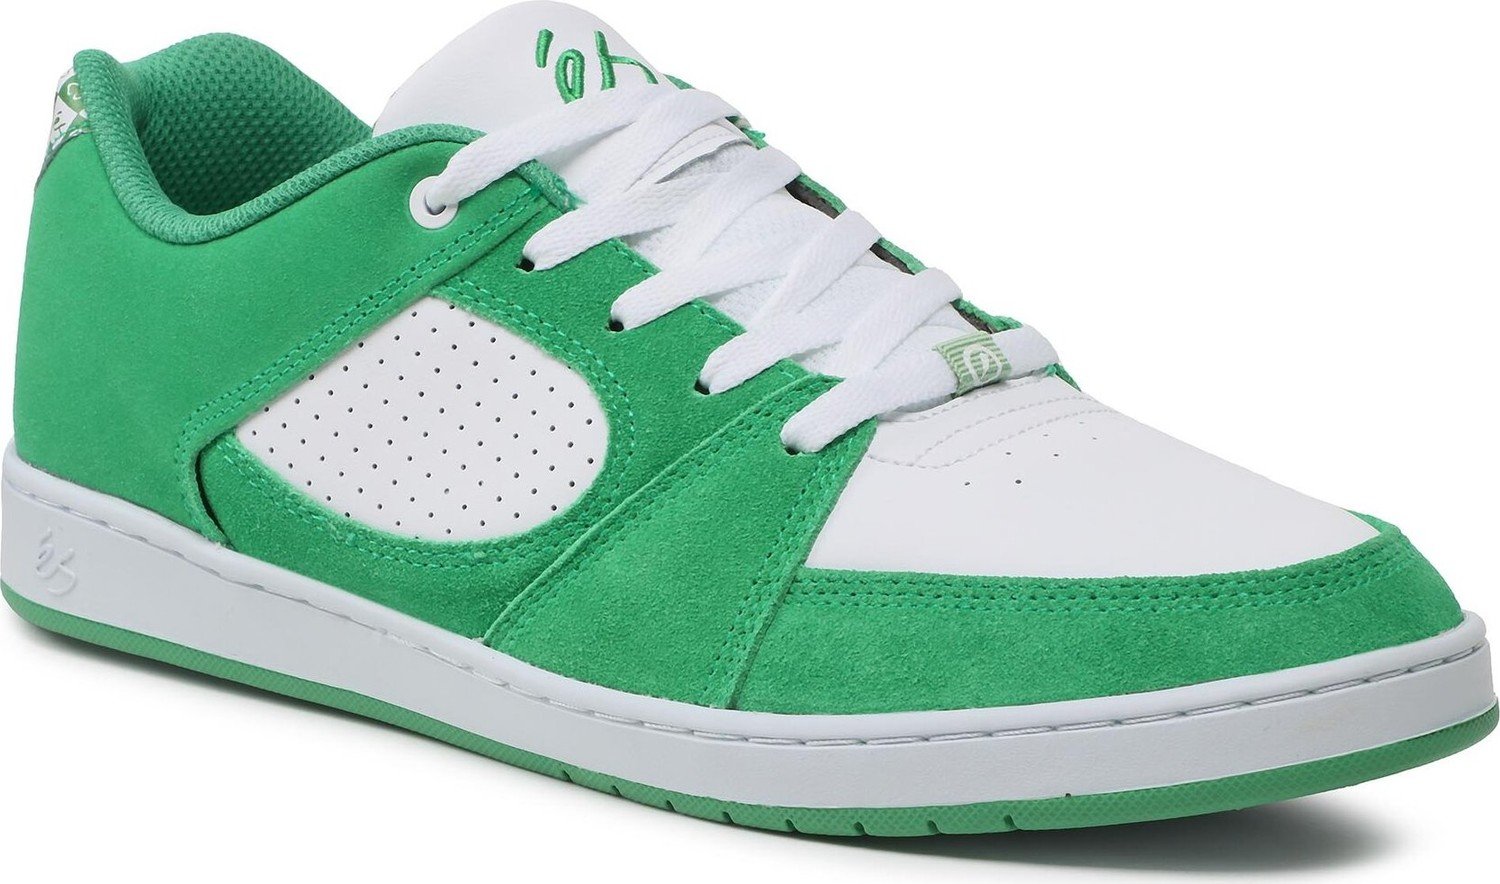 Sneakersy Es Accel Slim 5101000144 Green/White 311